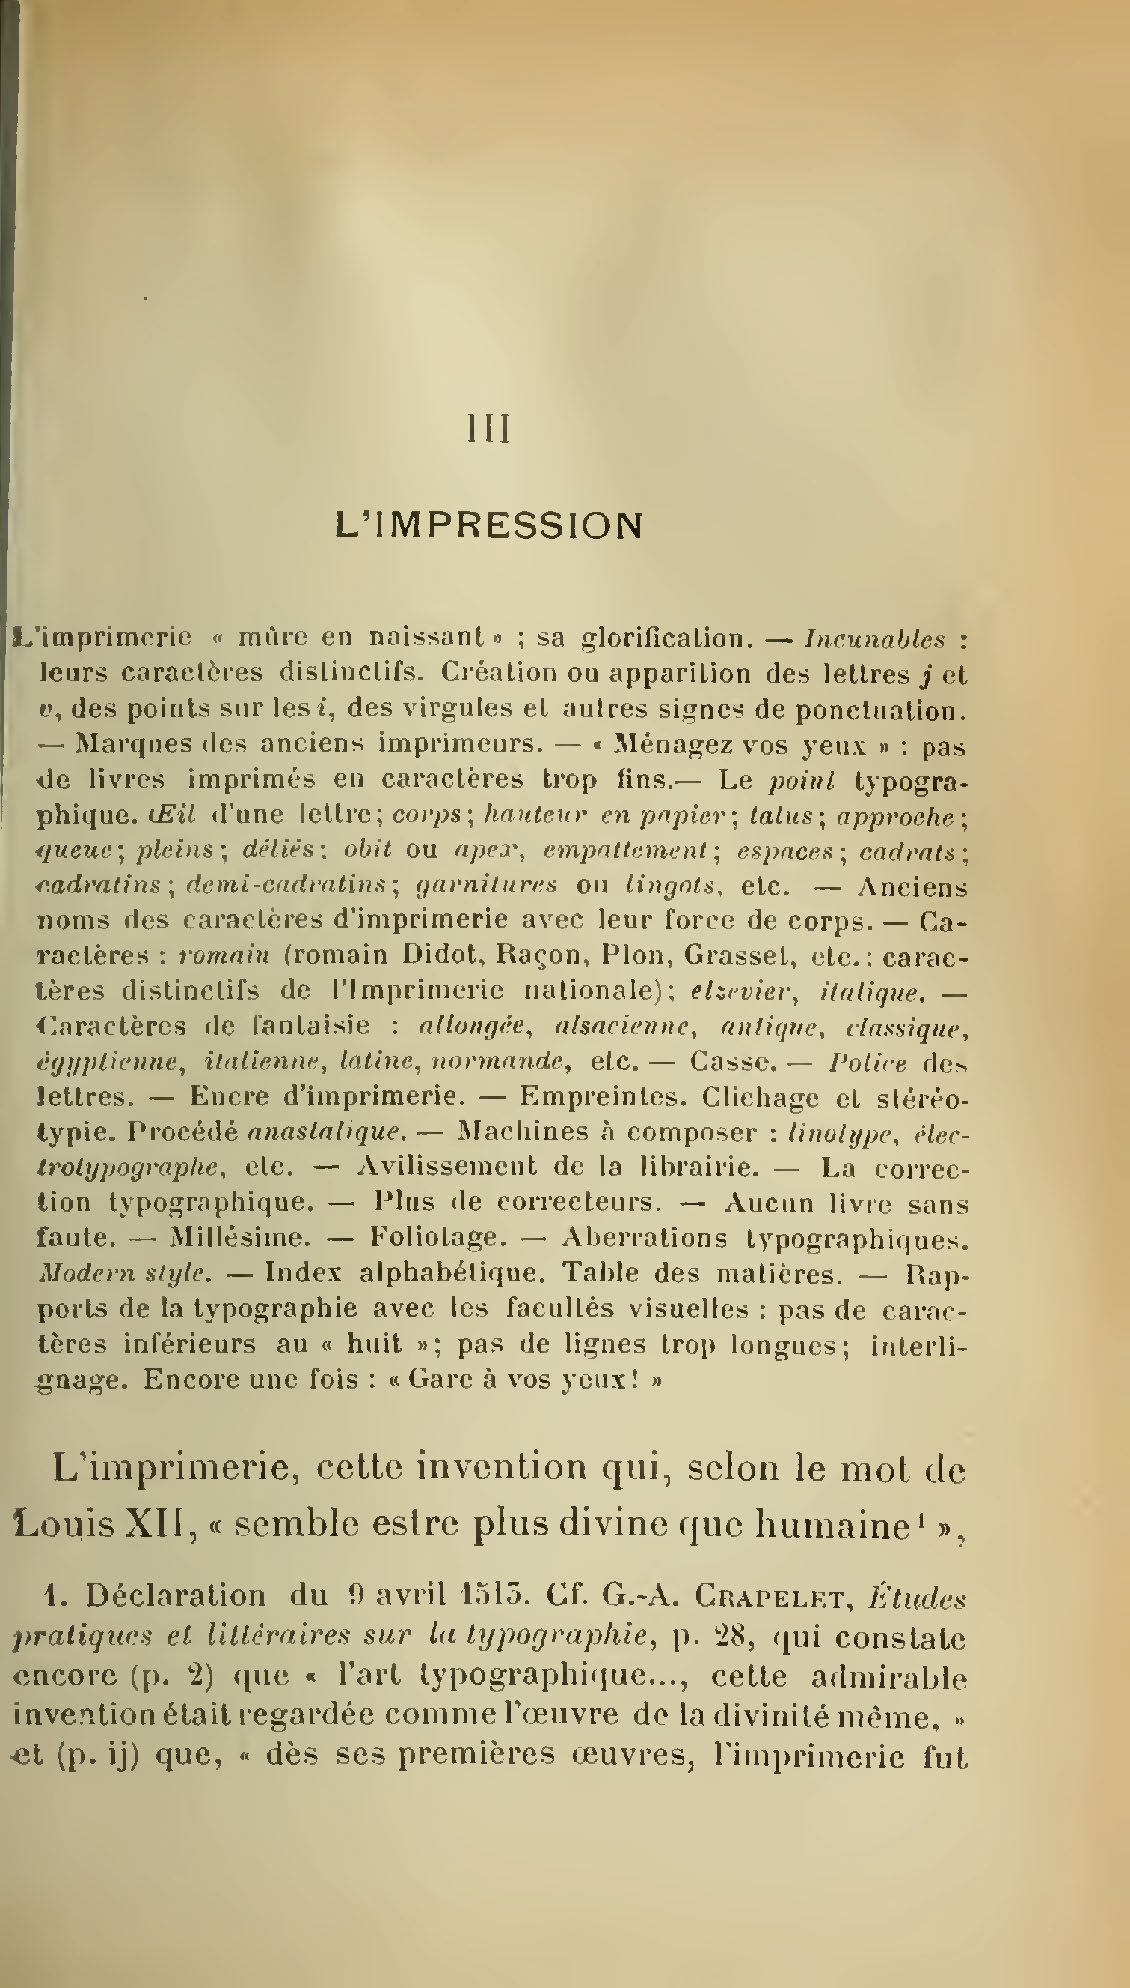 Albert Cim, Le Livre, t. III, p. 125.